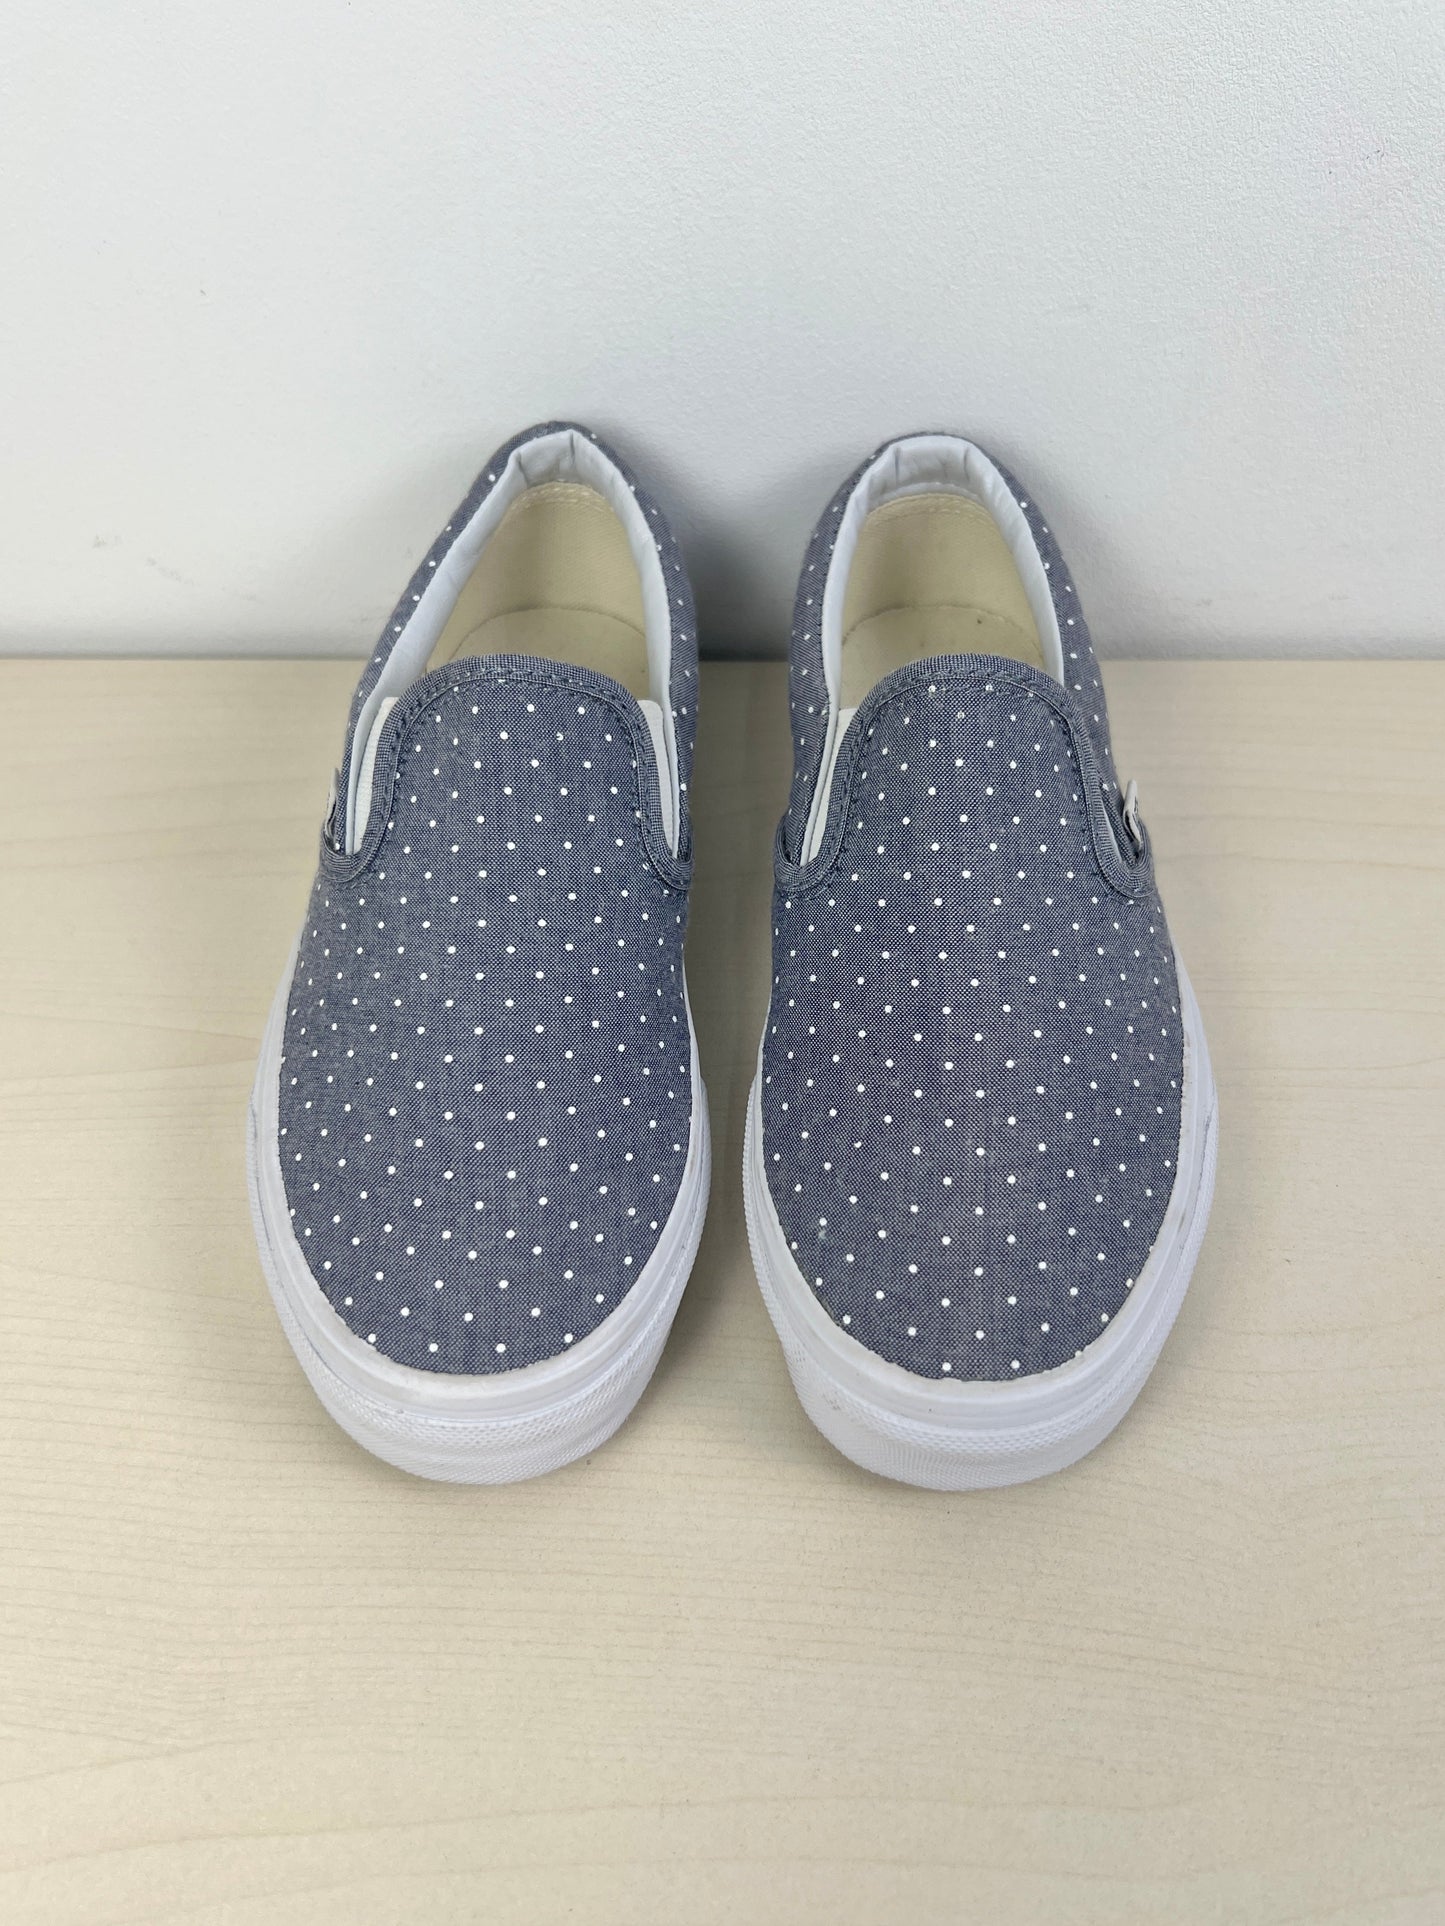 Polkadot Pattern Shoes Flats Vans, Size 6